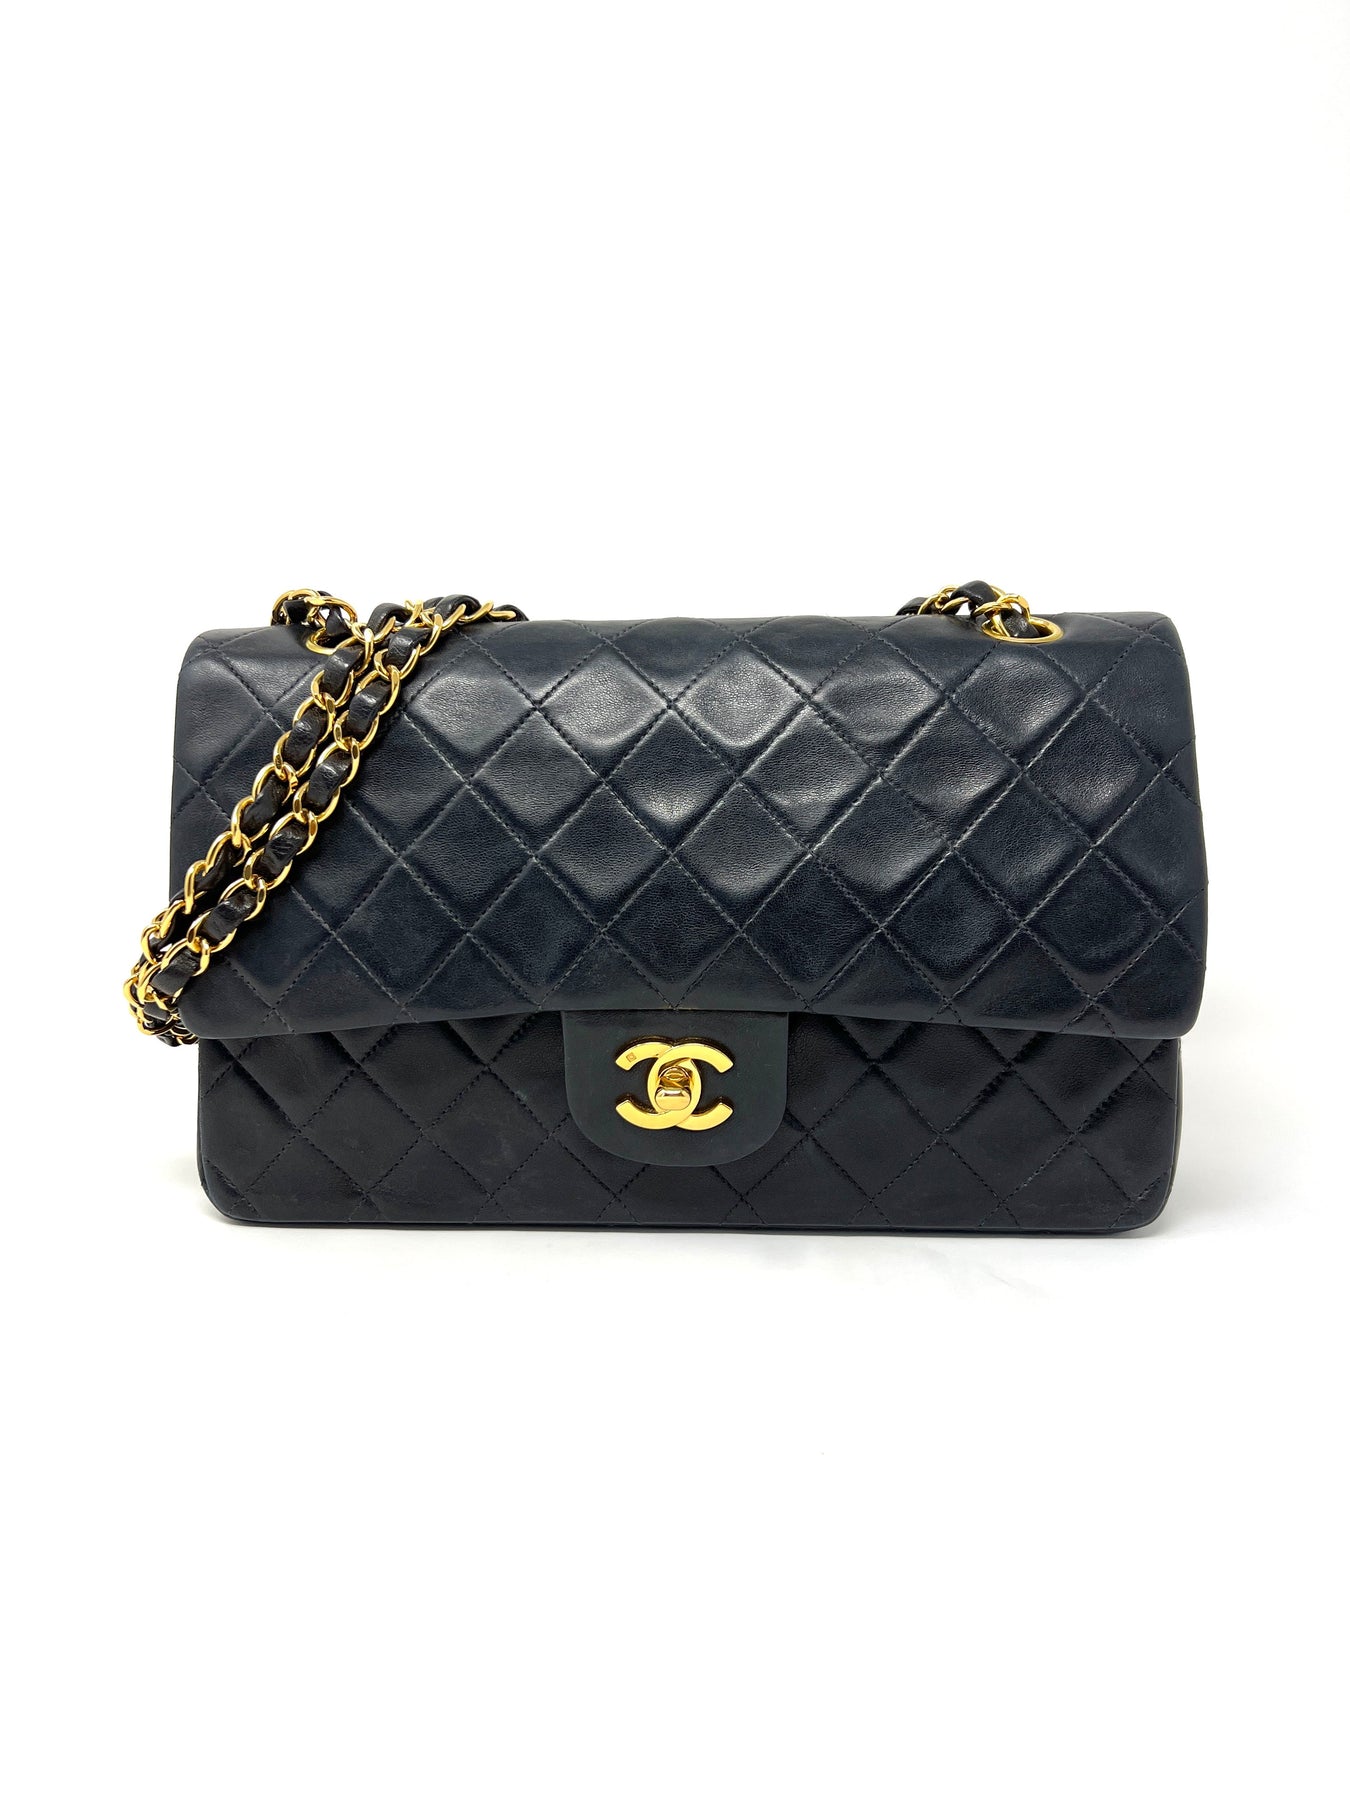 Timeless Beautiful and Rare Chanel Classic Full Flap Handbag 23 cm